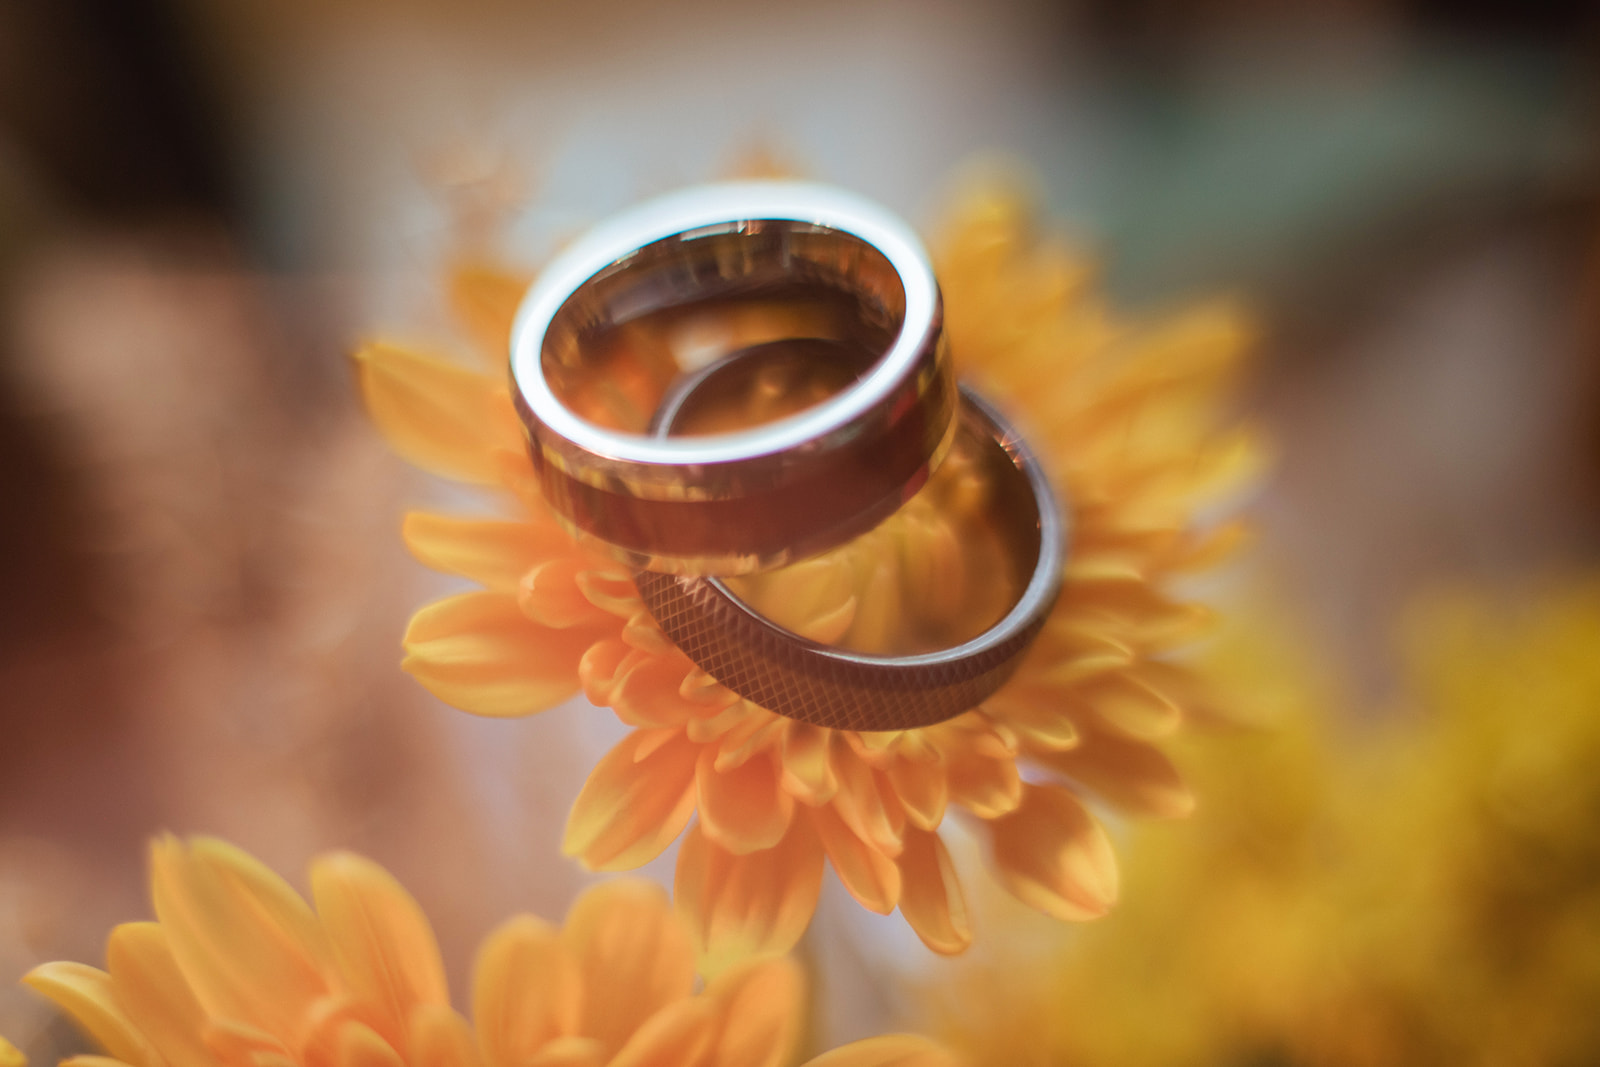 wedding rings on flower